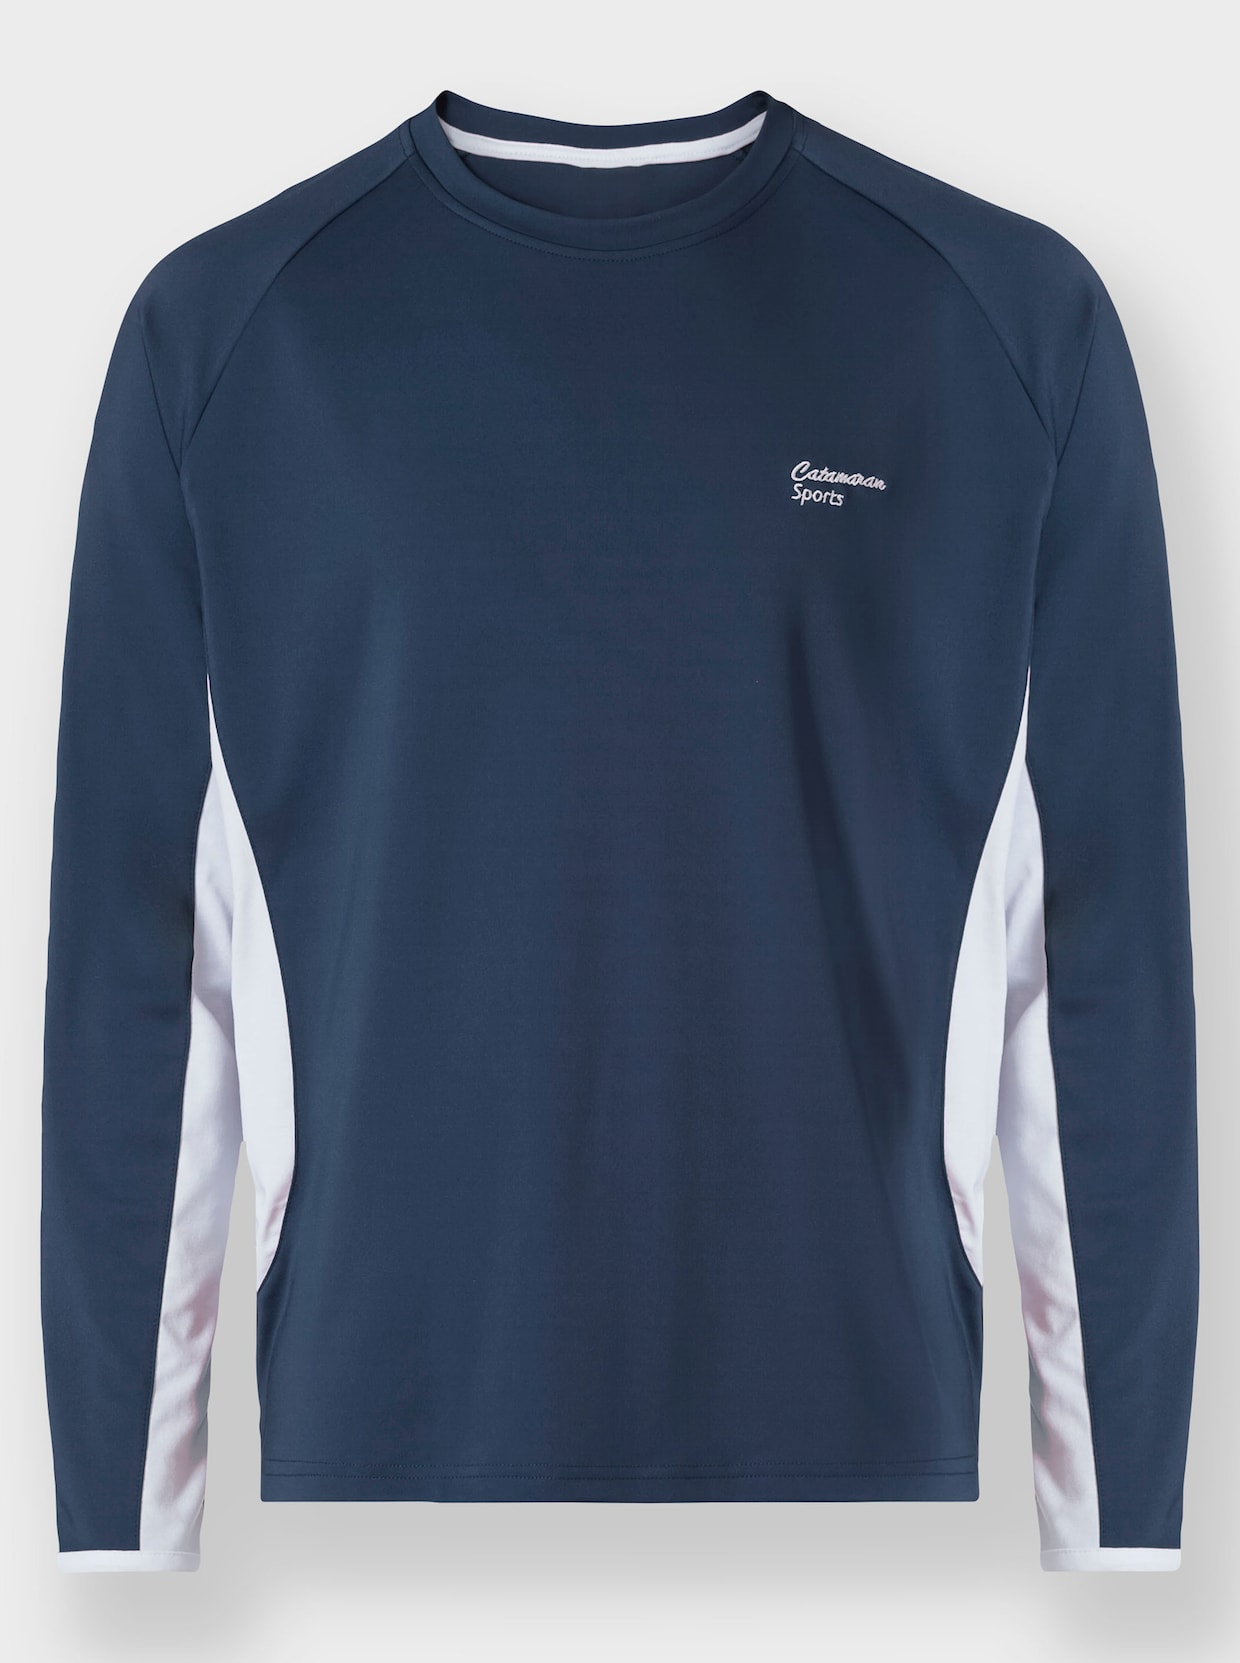 Catamaran Sports Funktions-Shirt - dunkelblau